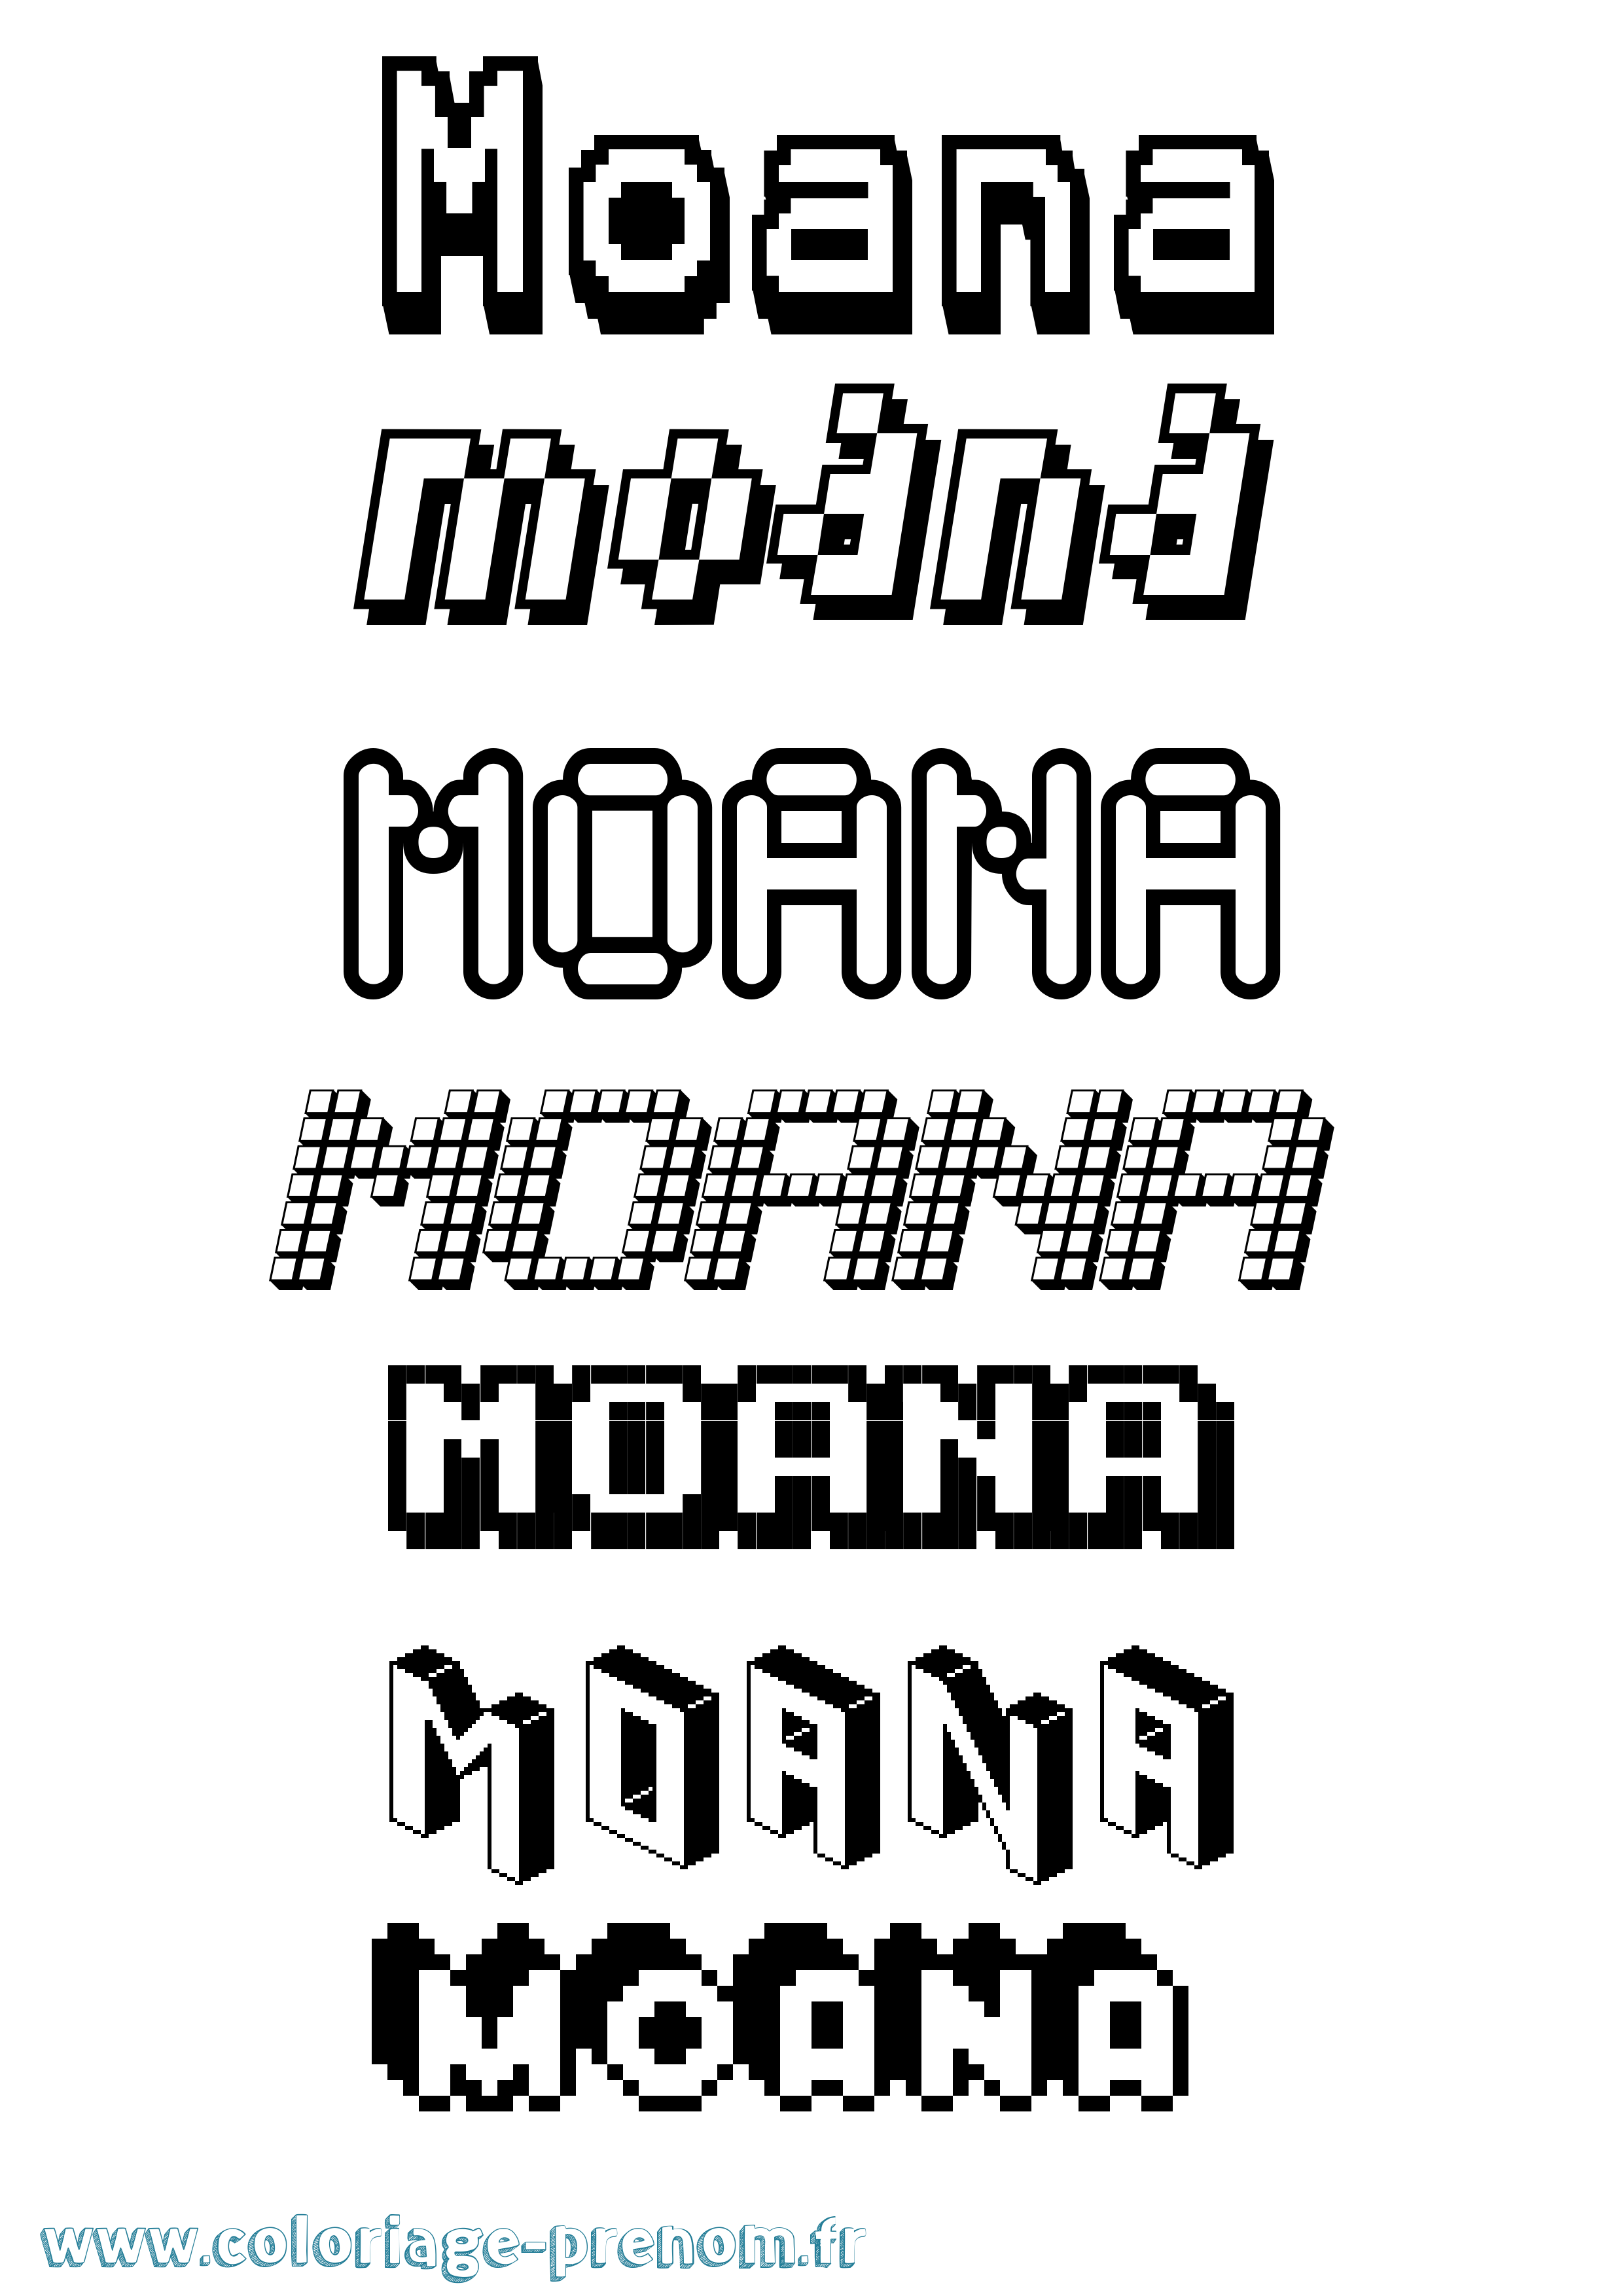 Coloriage prénom Moana Pixel